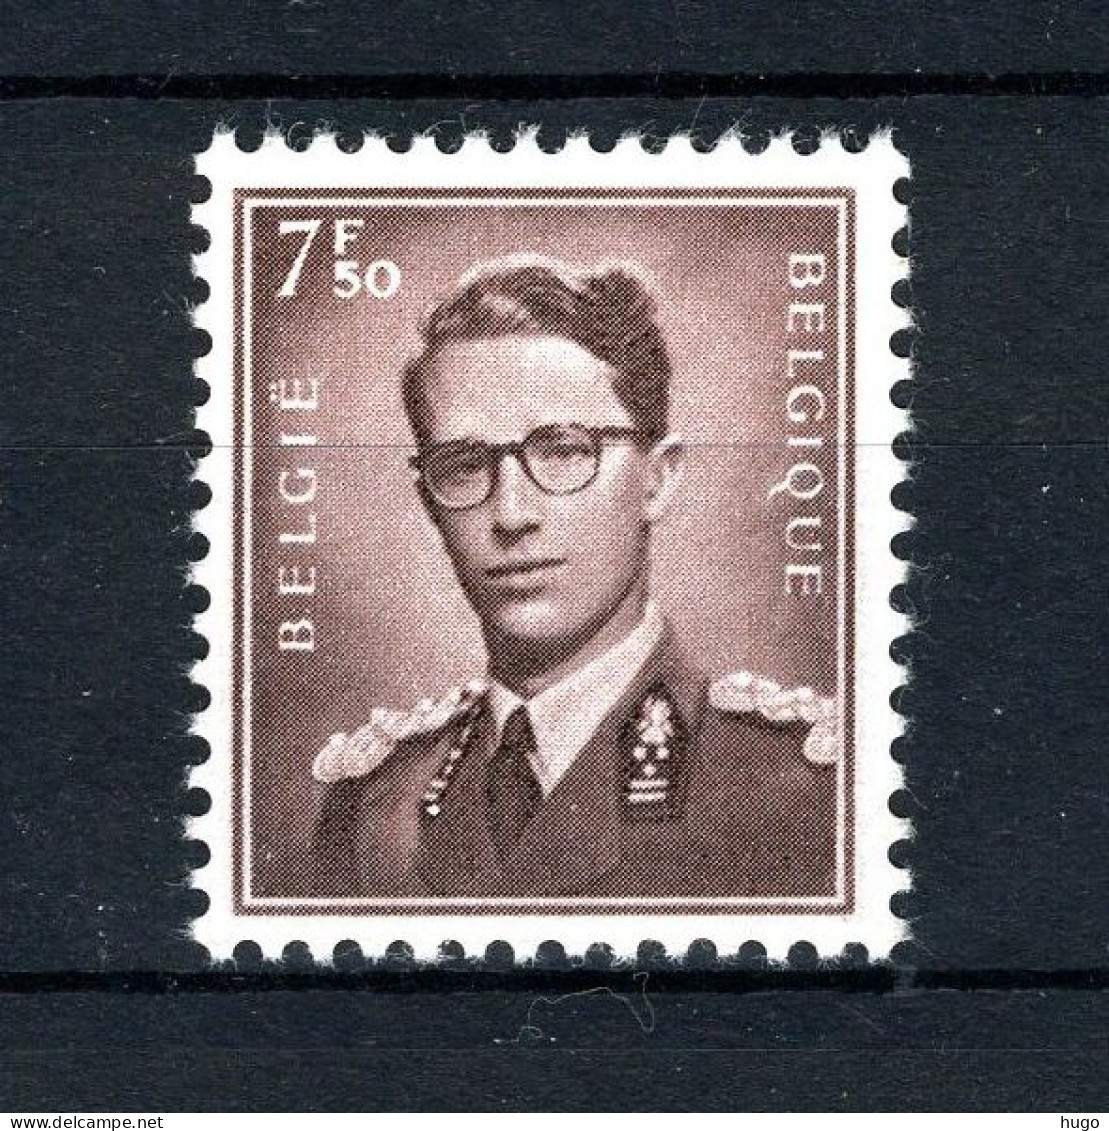 1070 MNH 1957-1960 - Z.M. Koning Boudewijn. - Unused Stamps